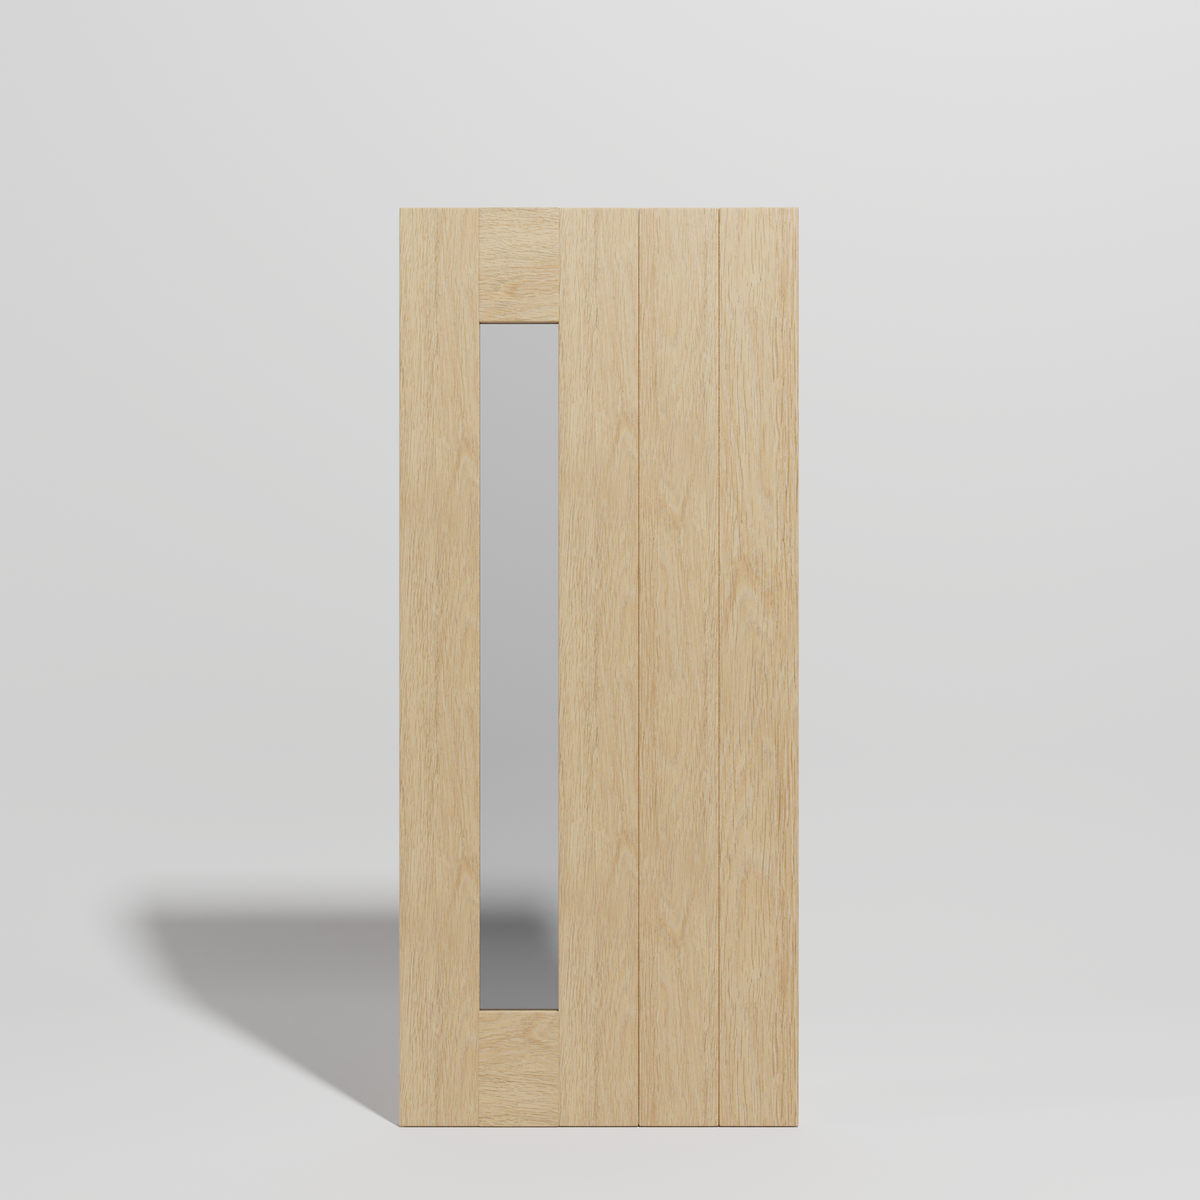 Mid-Century Modern Panel Side Lite Swinging Barn Door design by RealCraft - Door Plank Only